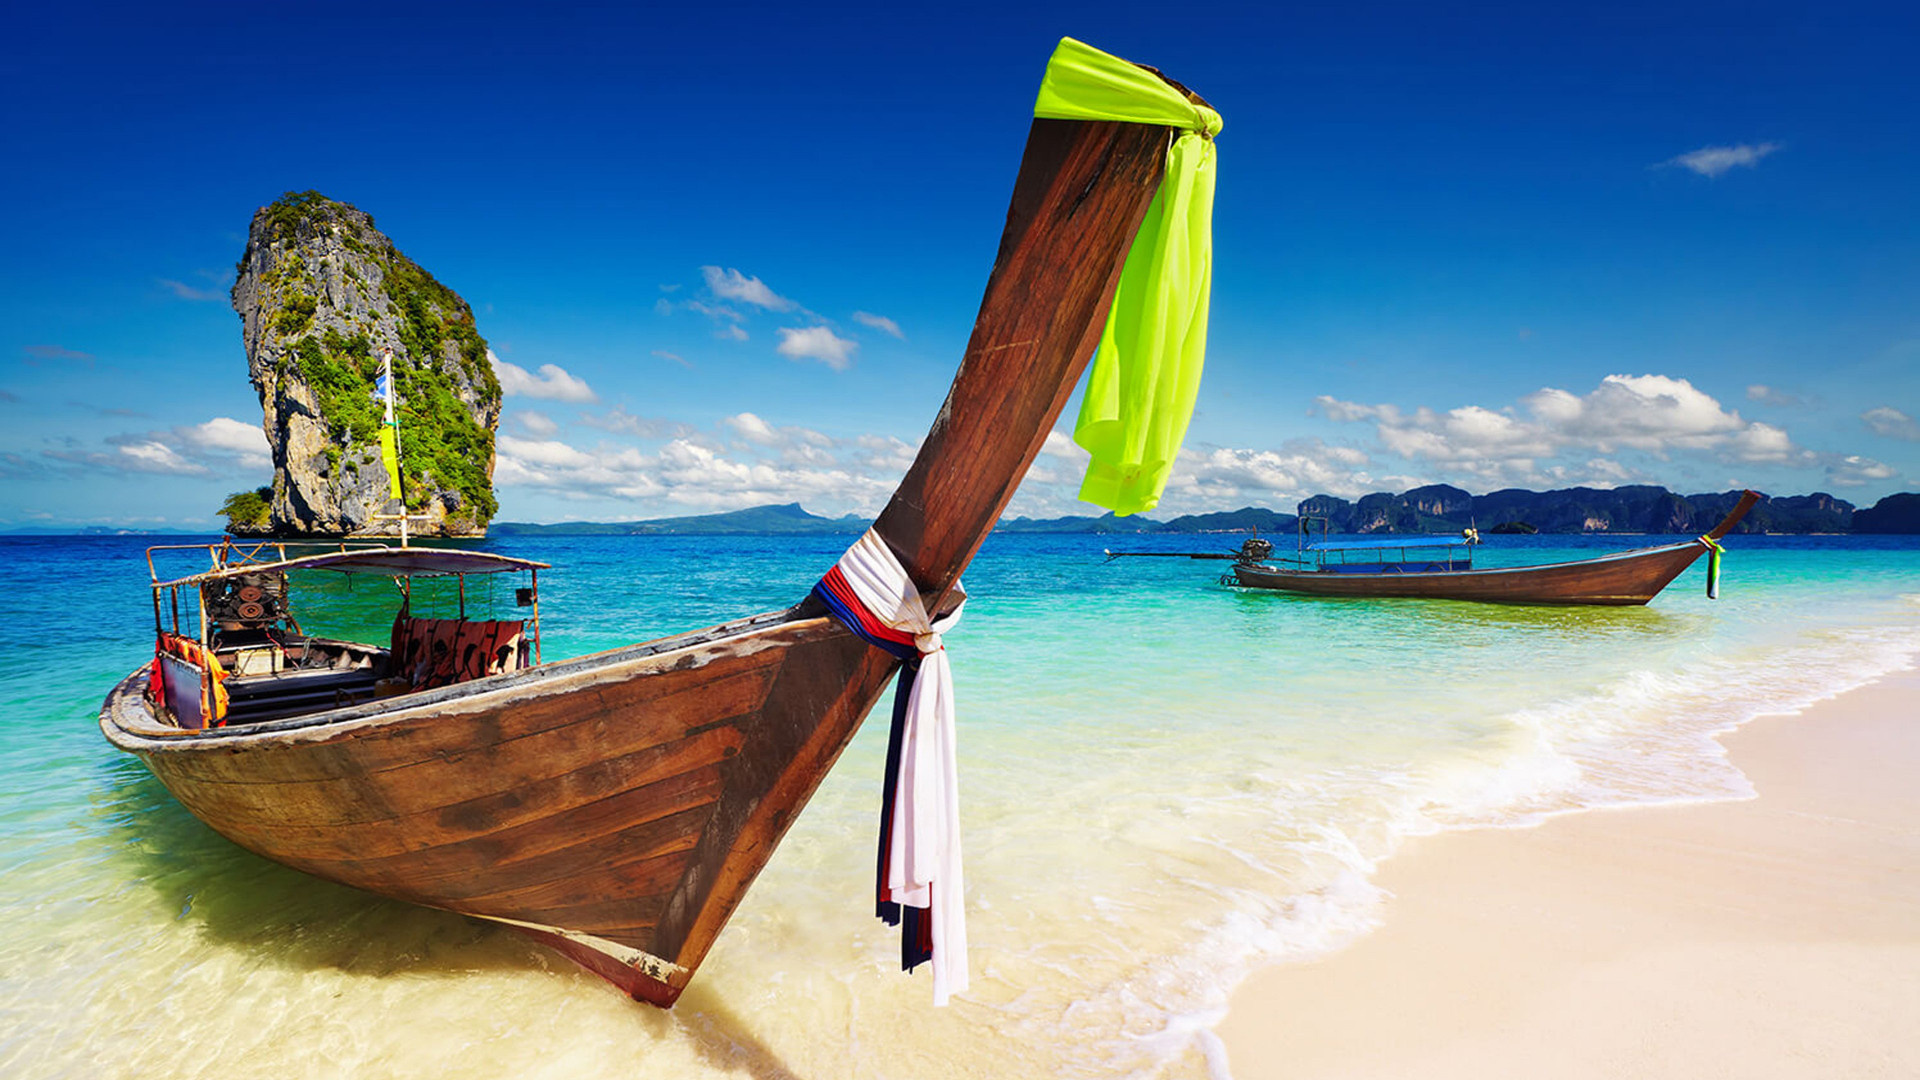 Phuket's best beach, Tranquil scenery, Balmy ocean breeze, Picture-perfect, 1920x1080 Full HD Desktop